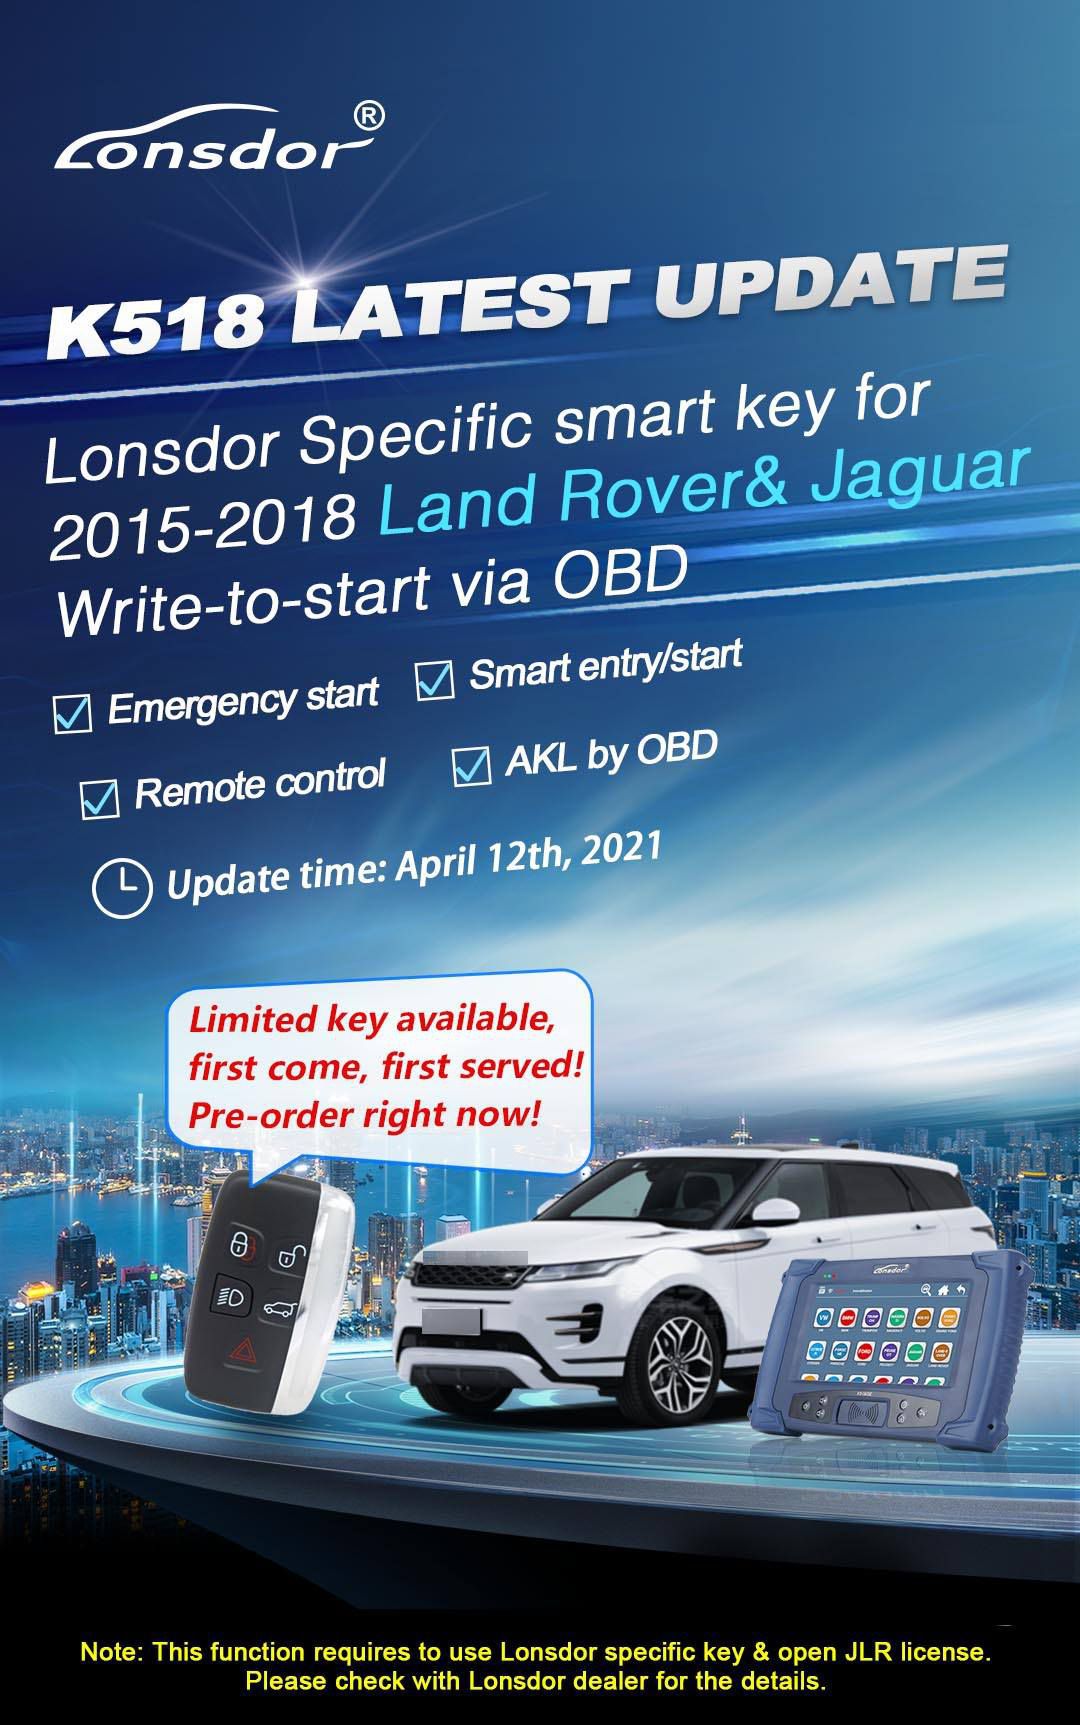 Licencia lonsdor jlr 2015 - 2018 Land Rover Jaguar iniciada por escritura OBD